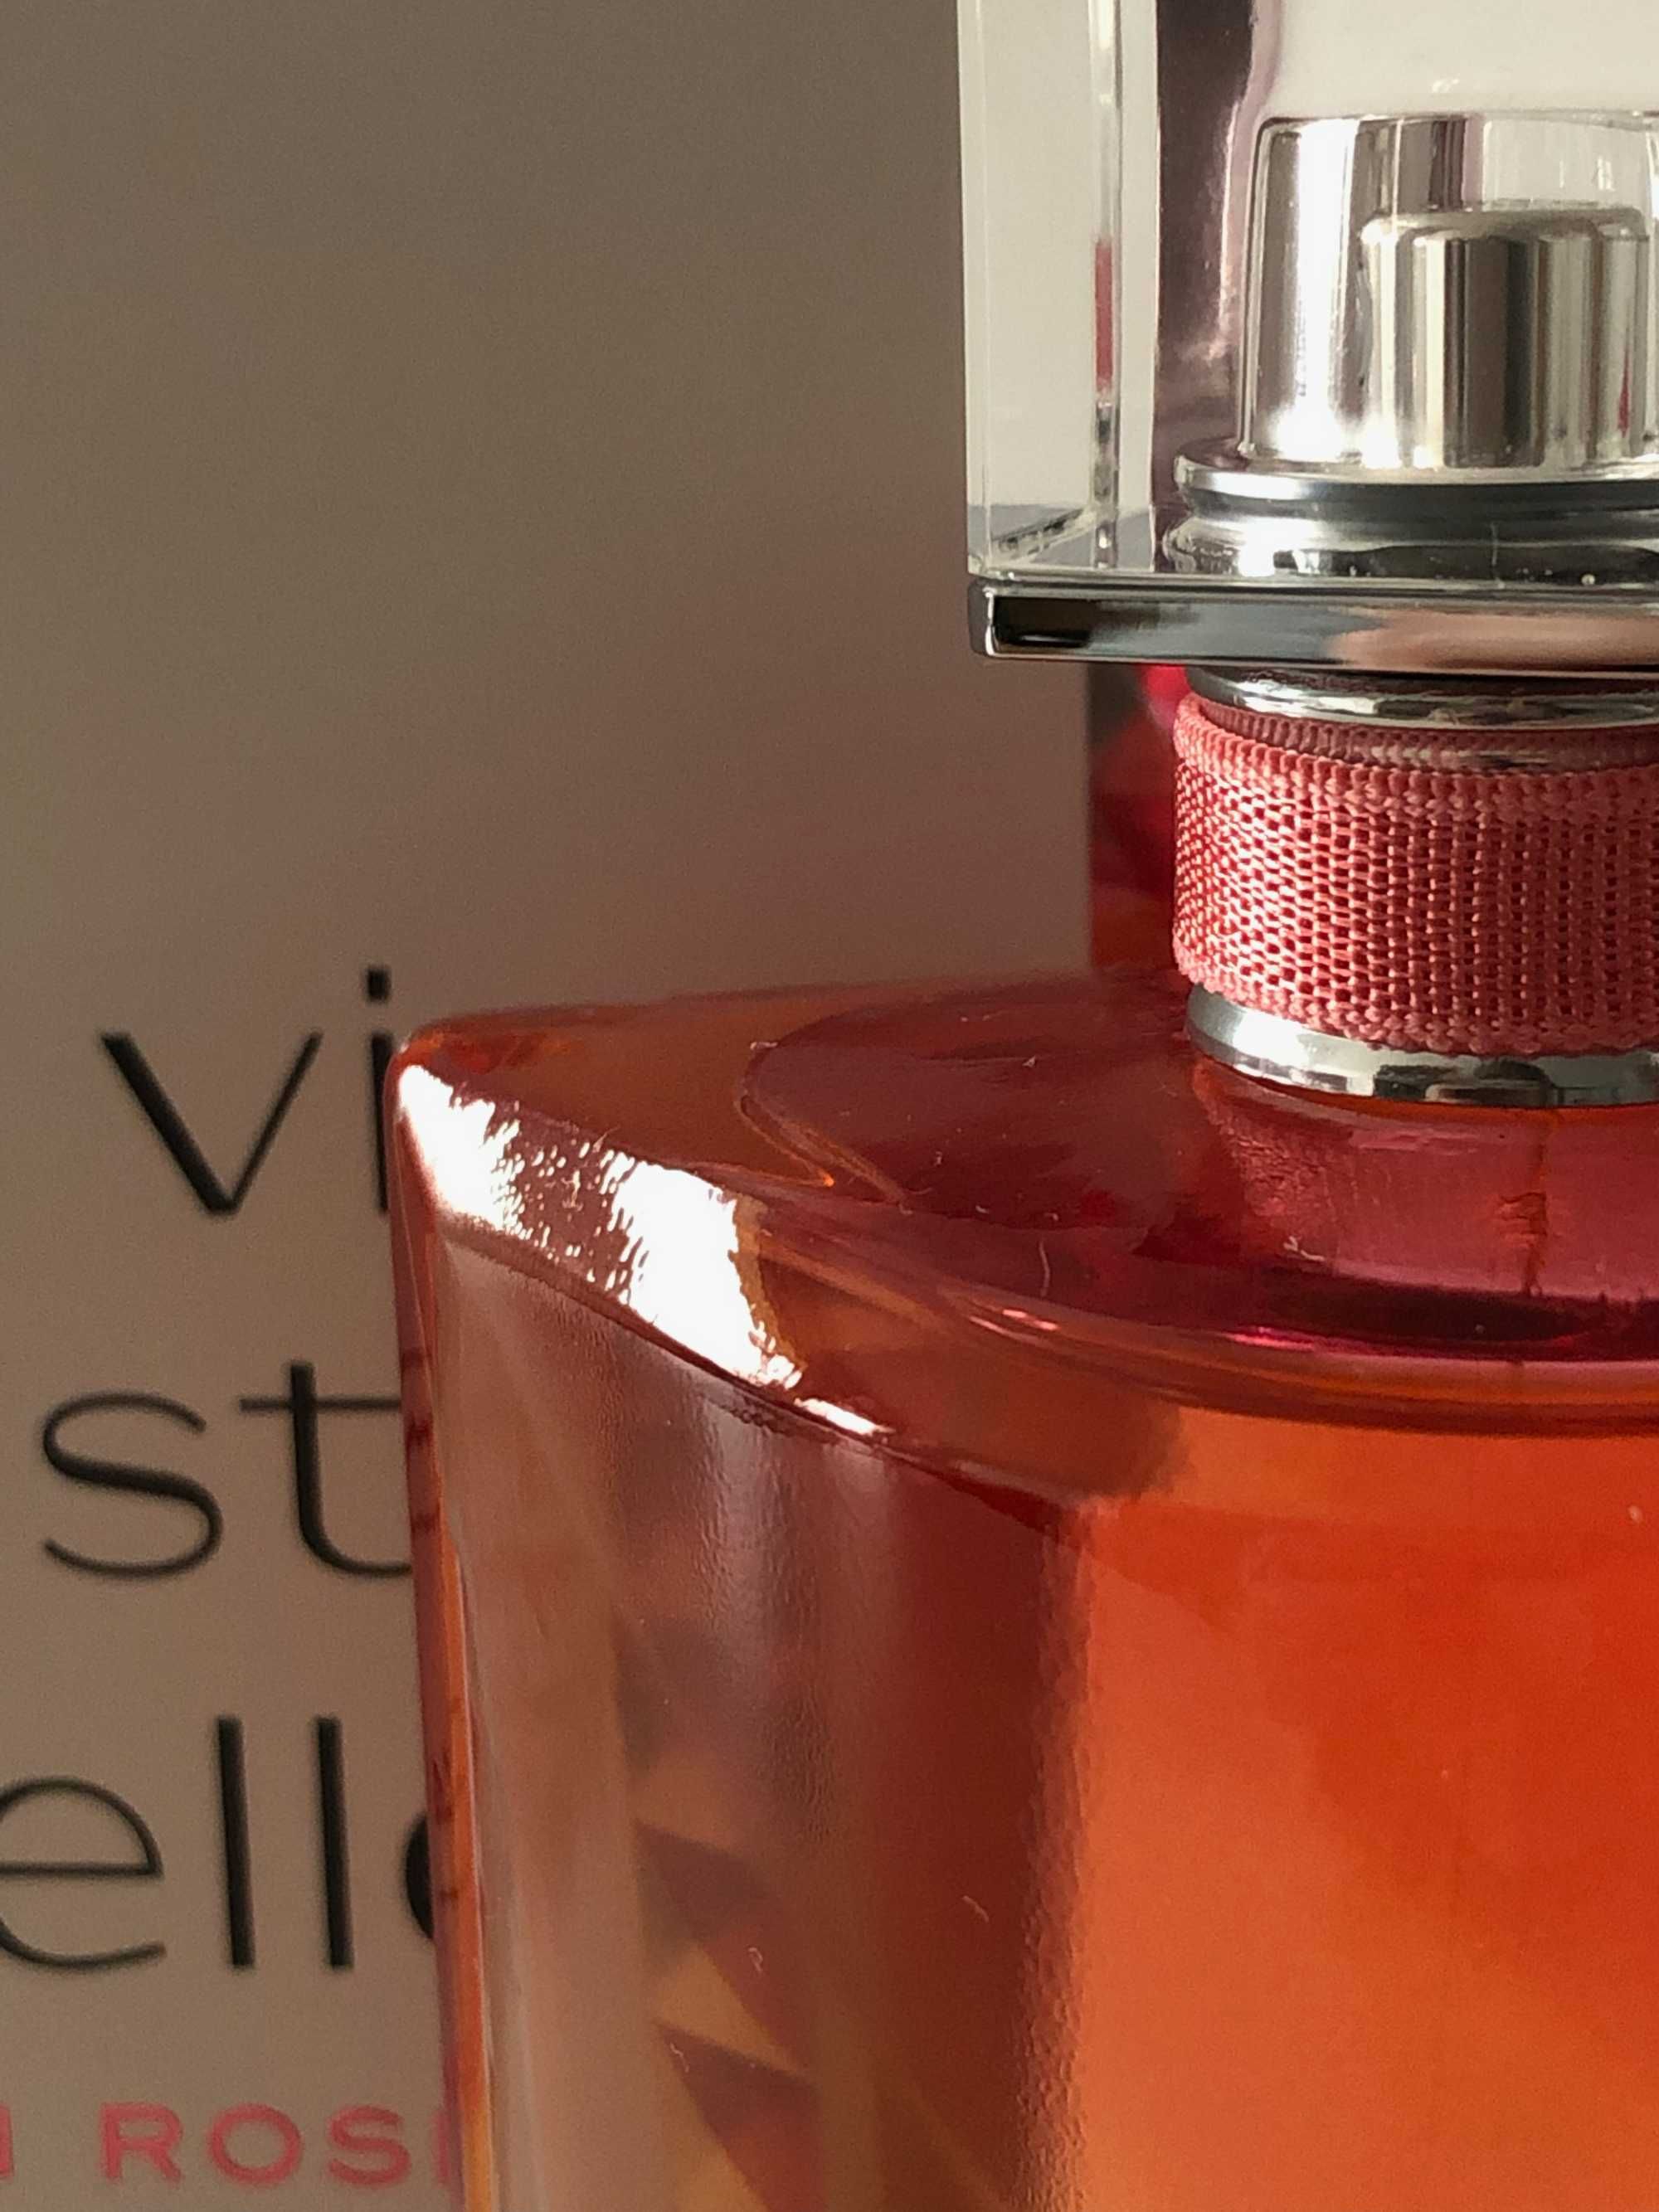 Perfumy Lancôme La Vie est Belle en Rose 100 ml